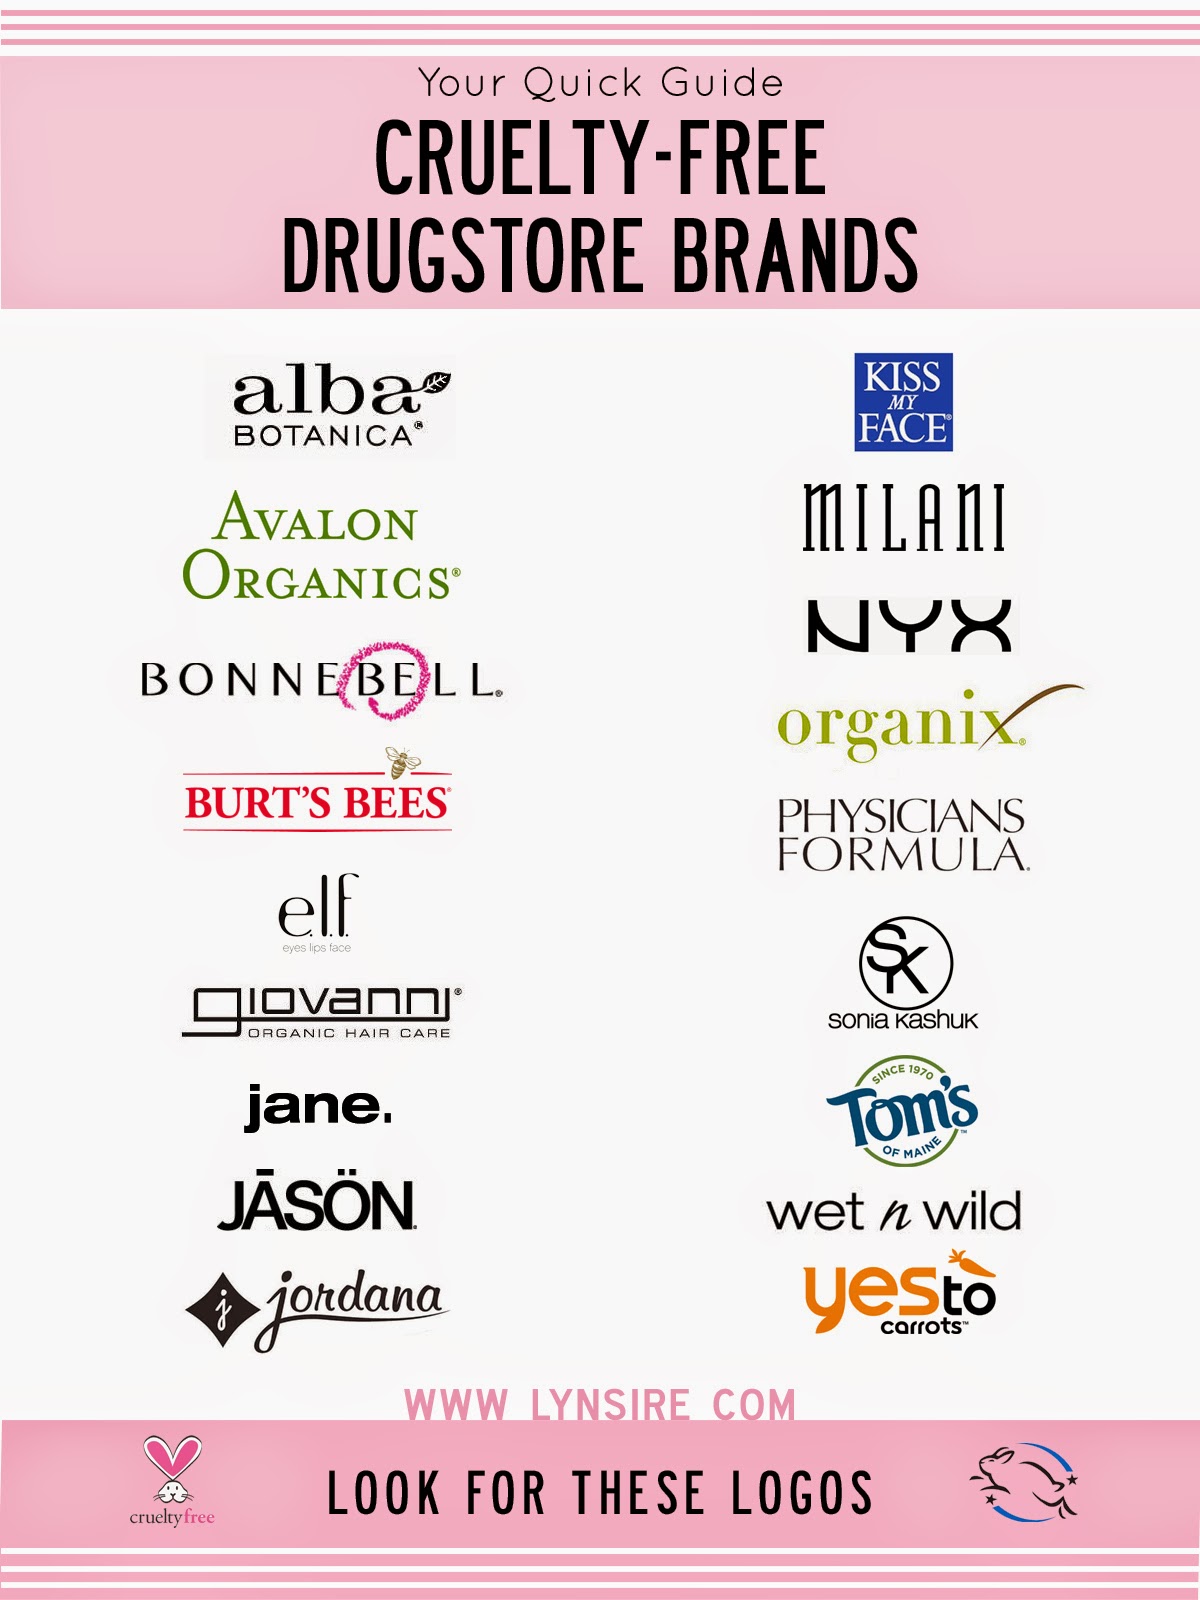 Cruelty-Free Drugstore Beauty Brands | LynSire: Cruelty-Free Life